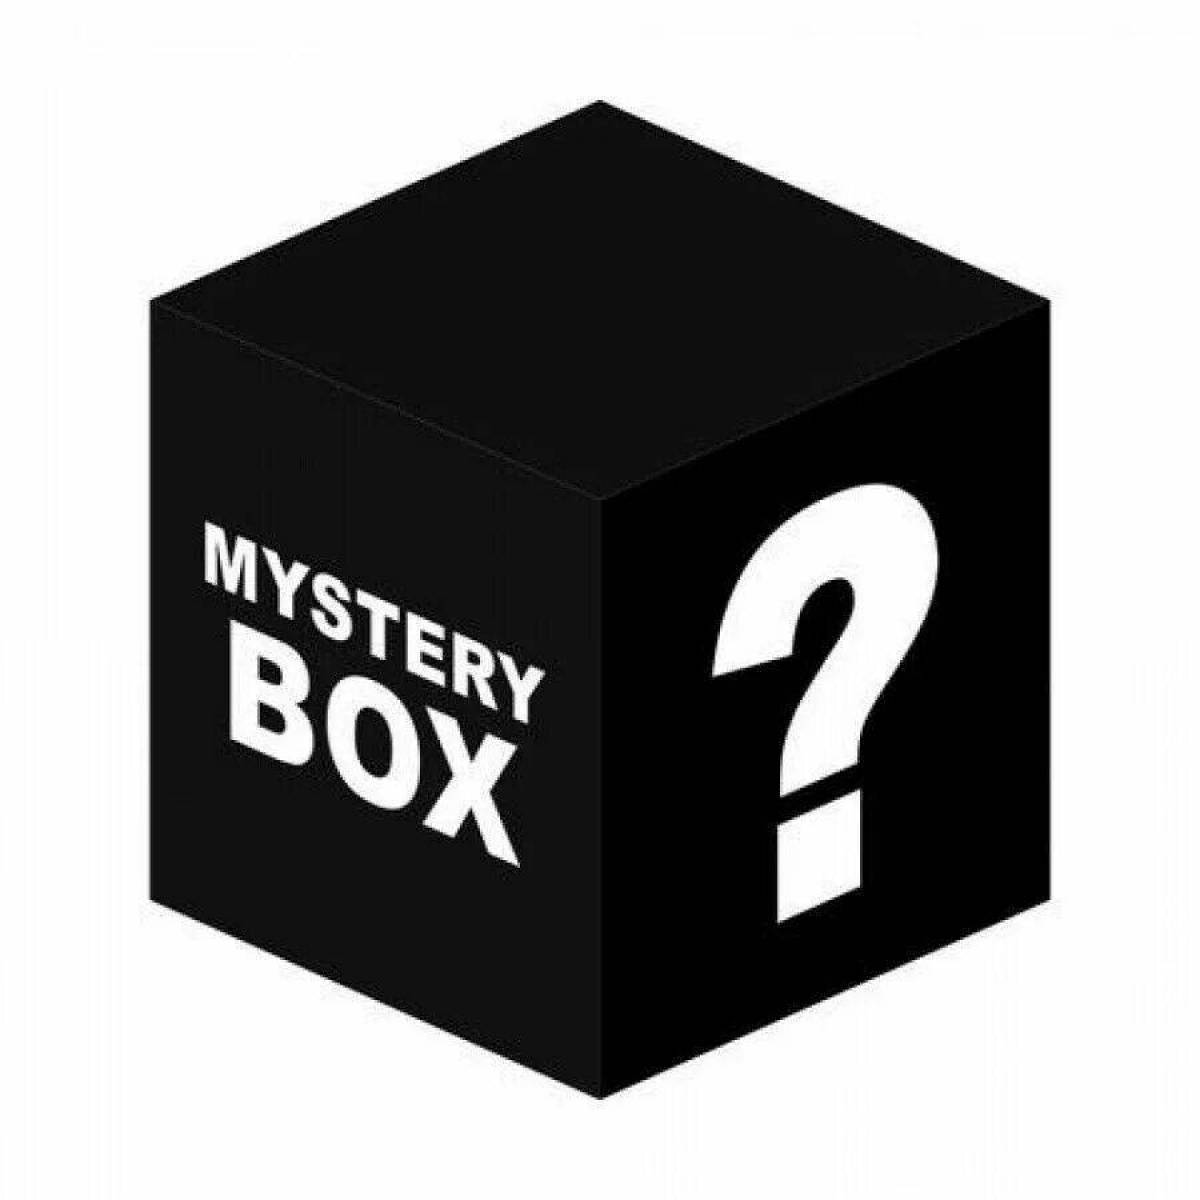 Charon mystery box #1